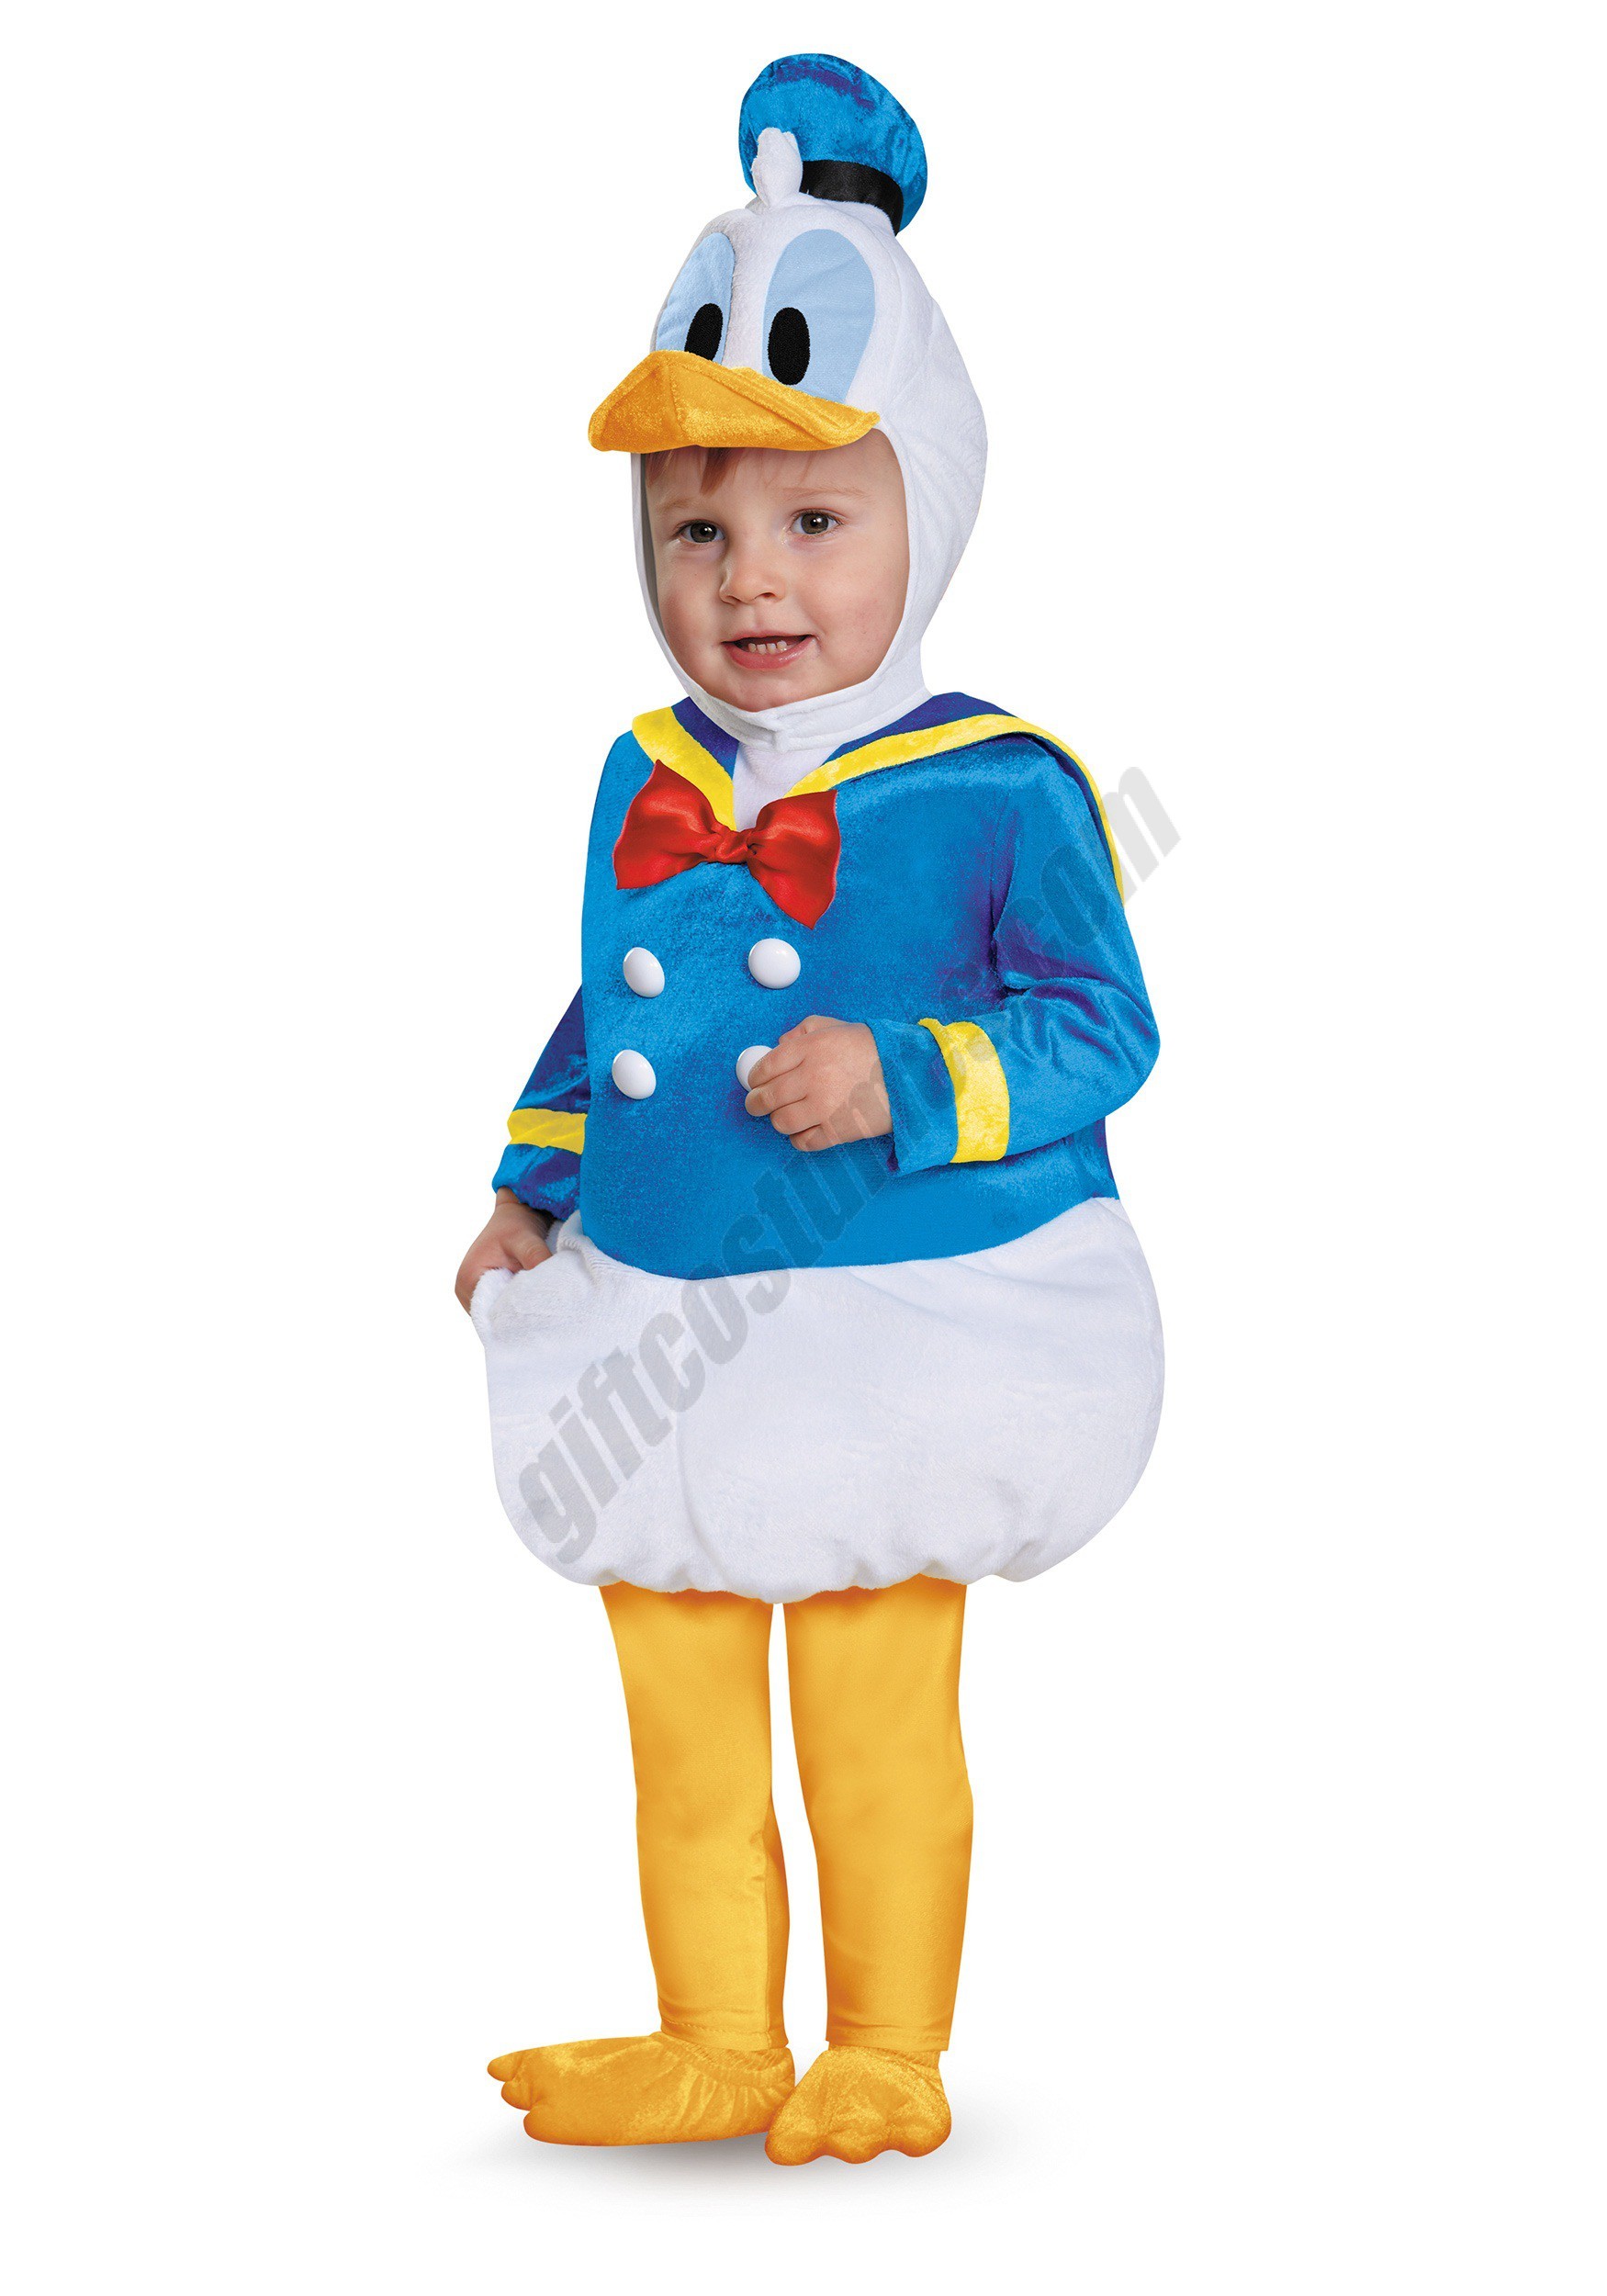 Donald Duck Prestige Infant Costume Promotions - Donald Duck Prestige Infant Costume Promotions